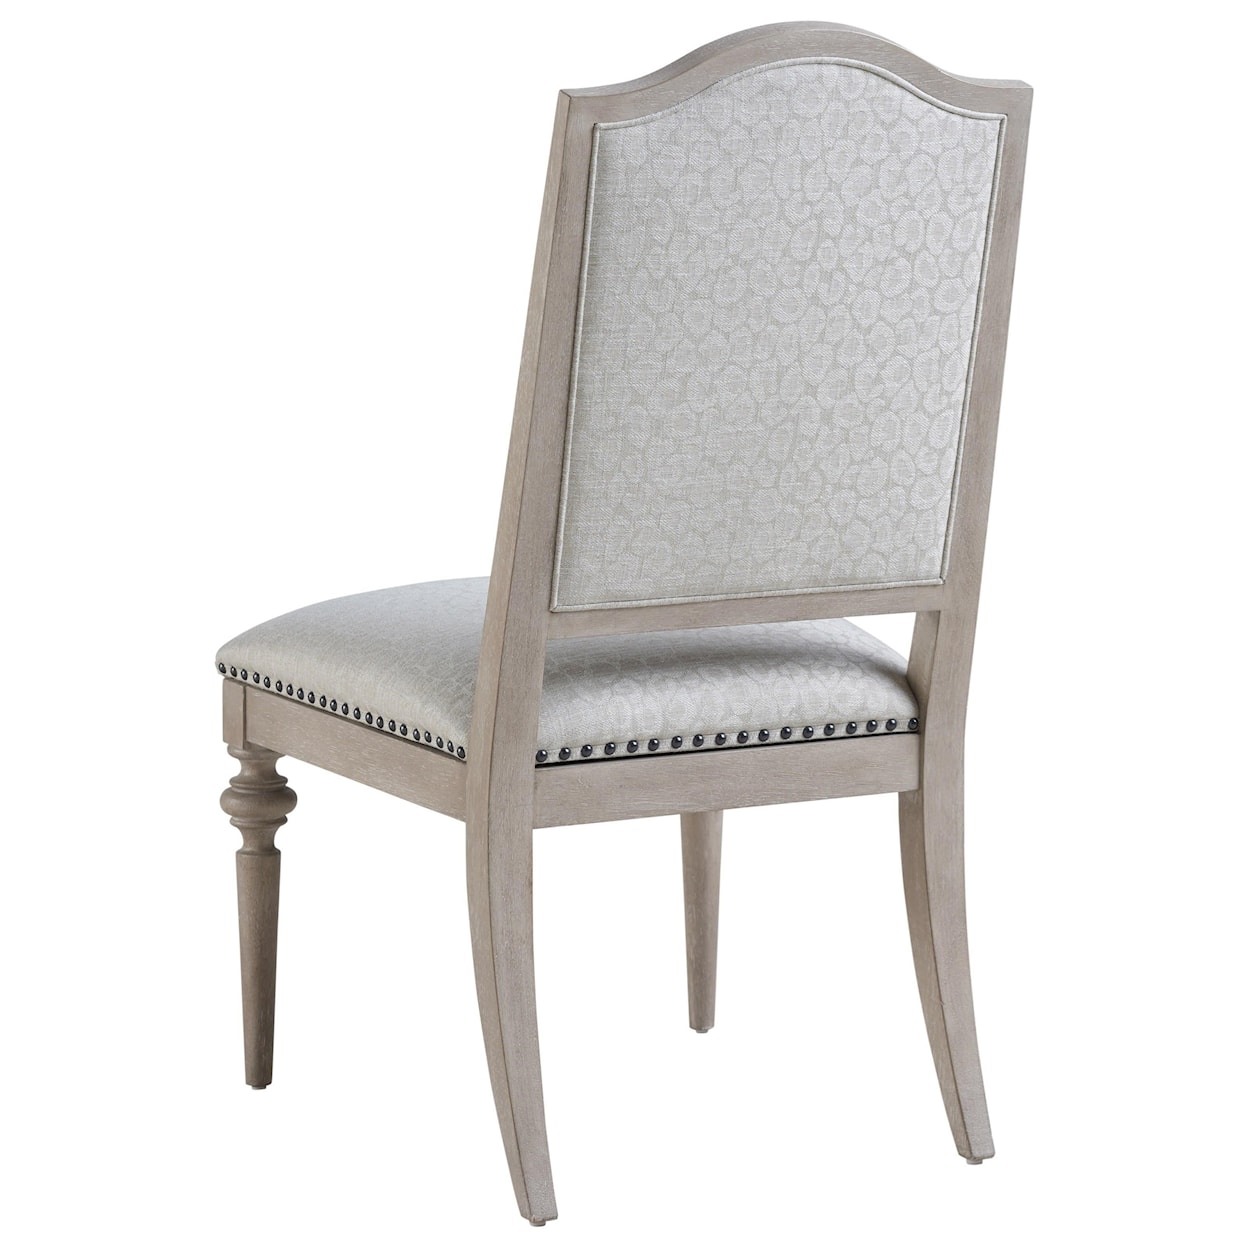 Barclay Butera Malibu Aidan Upholstered Side Chair